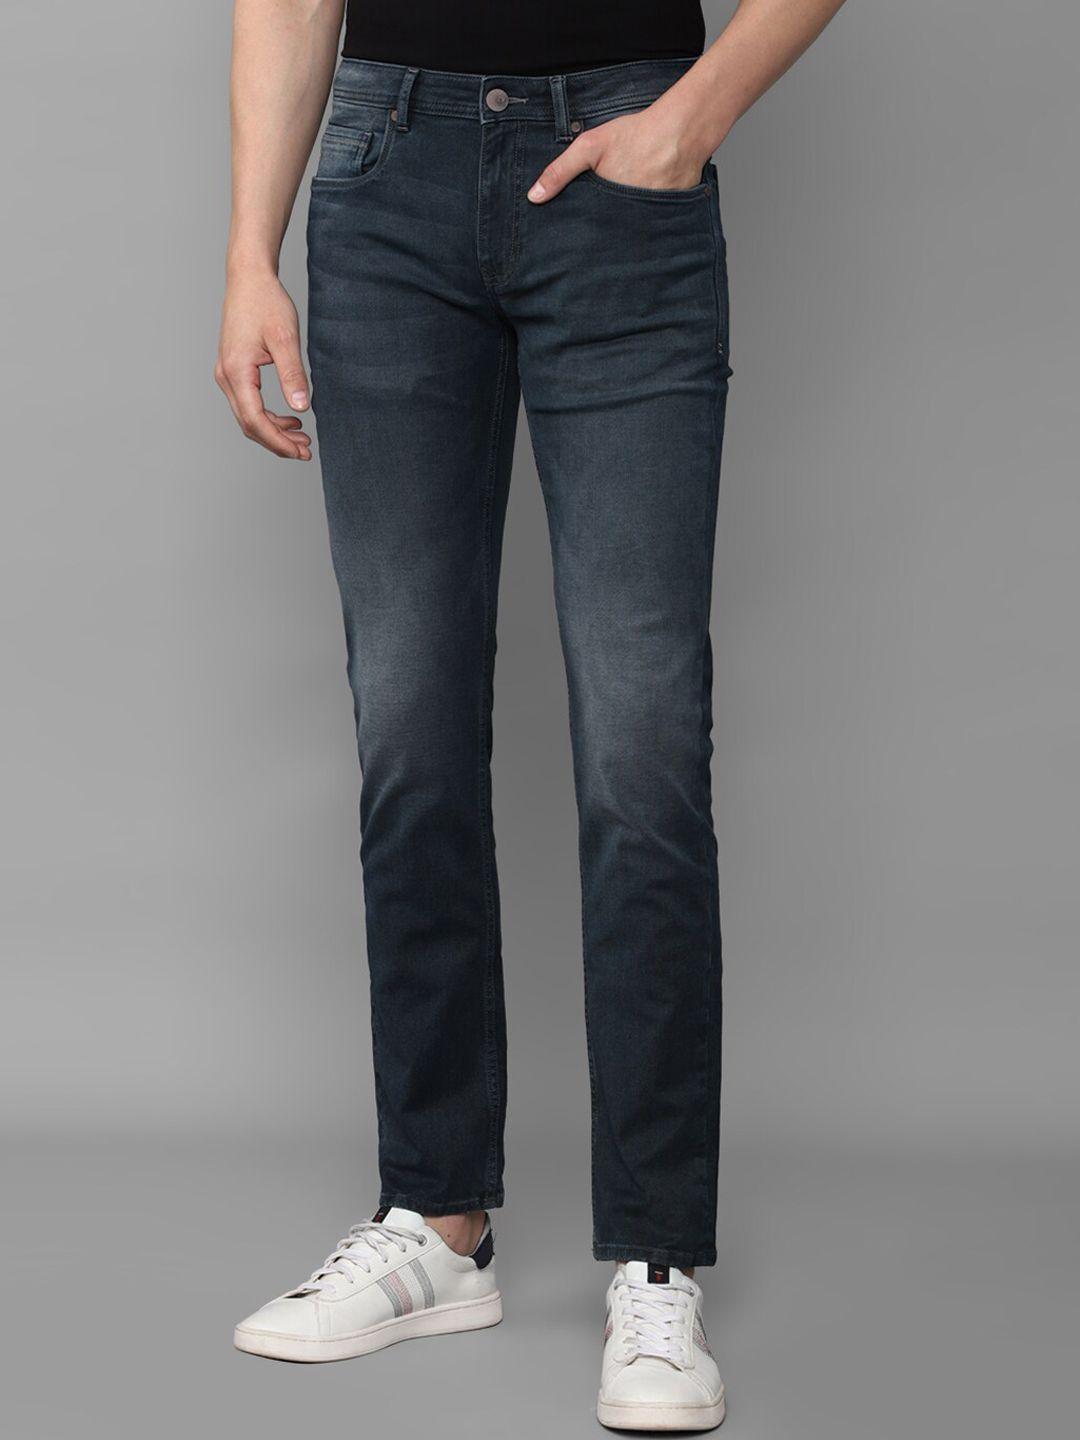 louis philippe jeans men navy blue slim fit light fade jeans